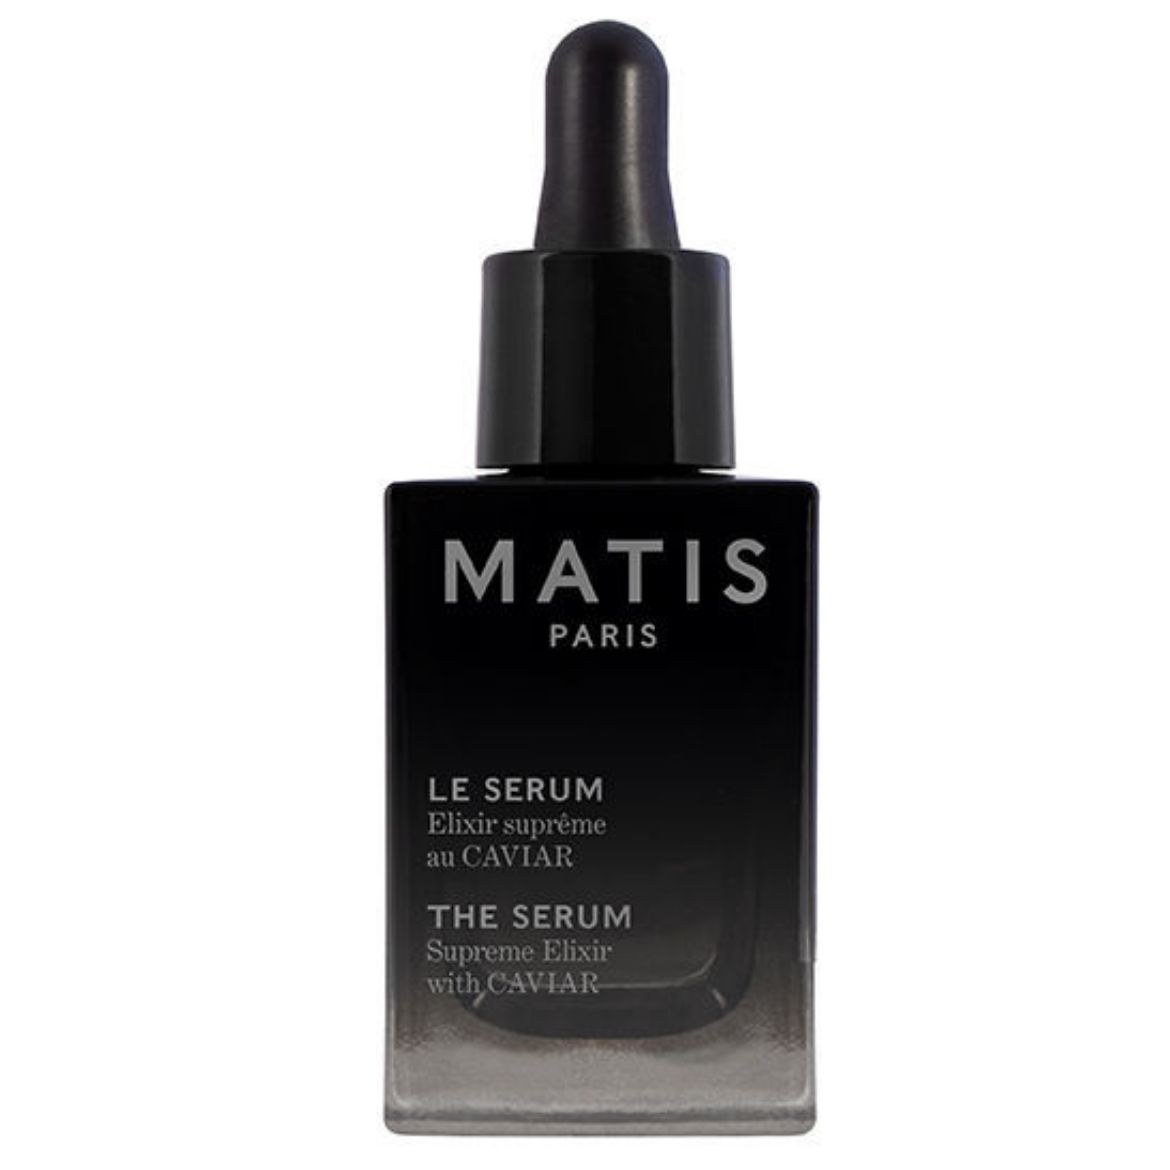 Image of Matis Le Serum (30ml)